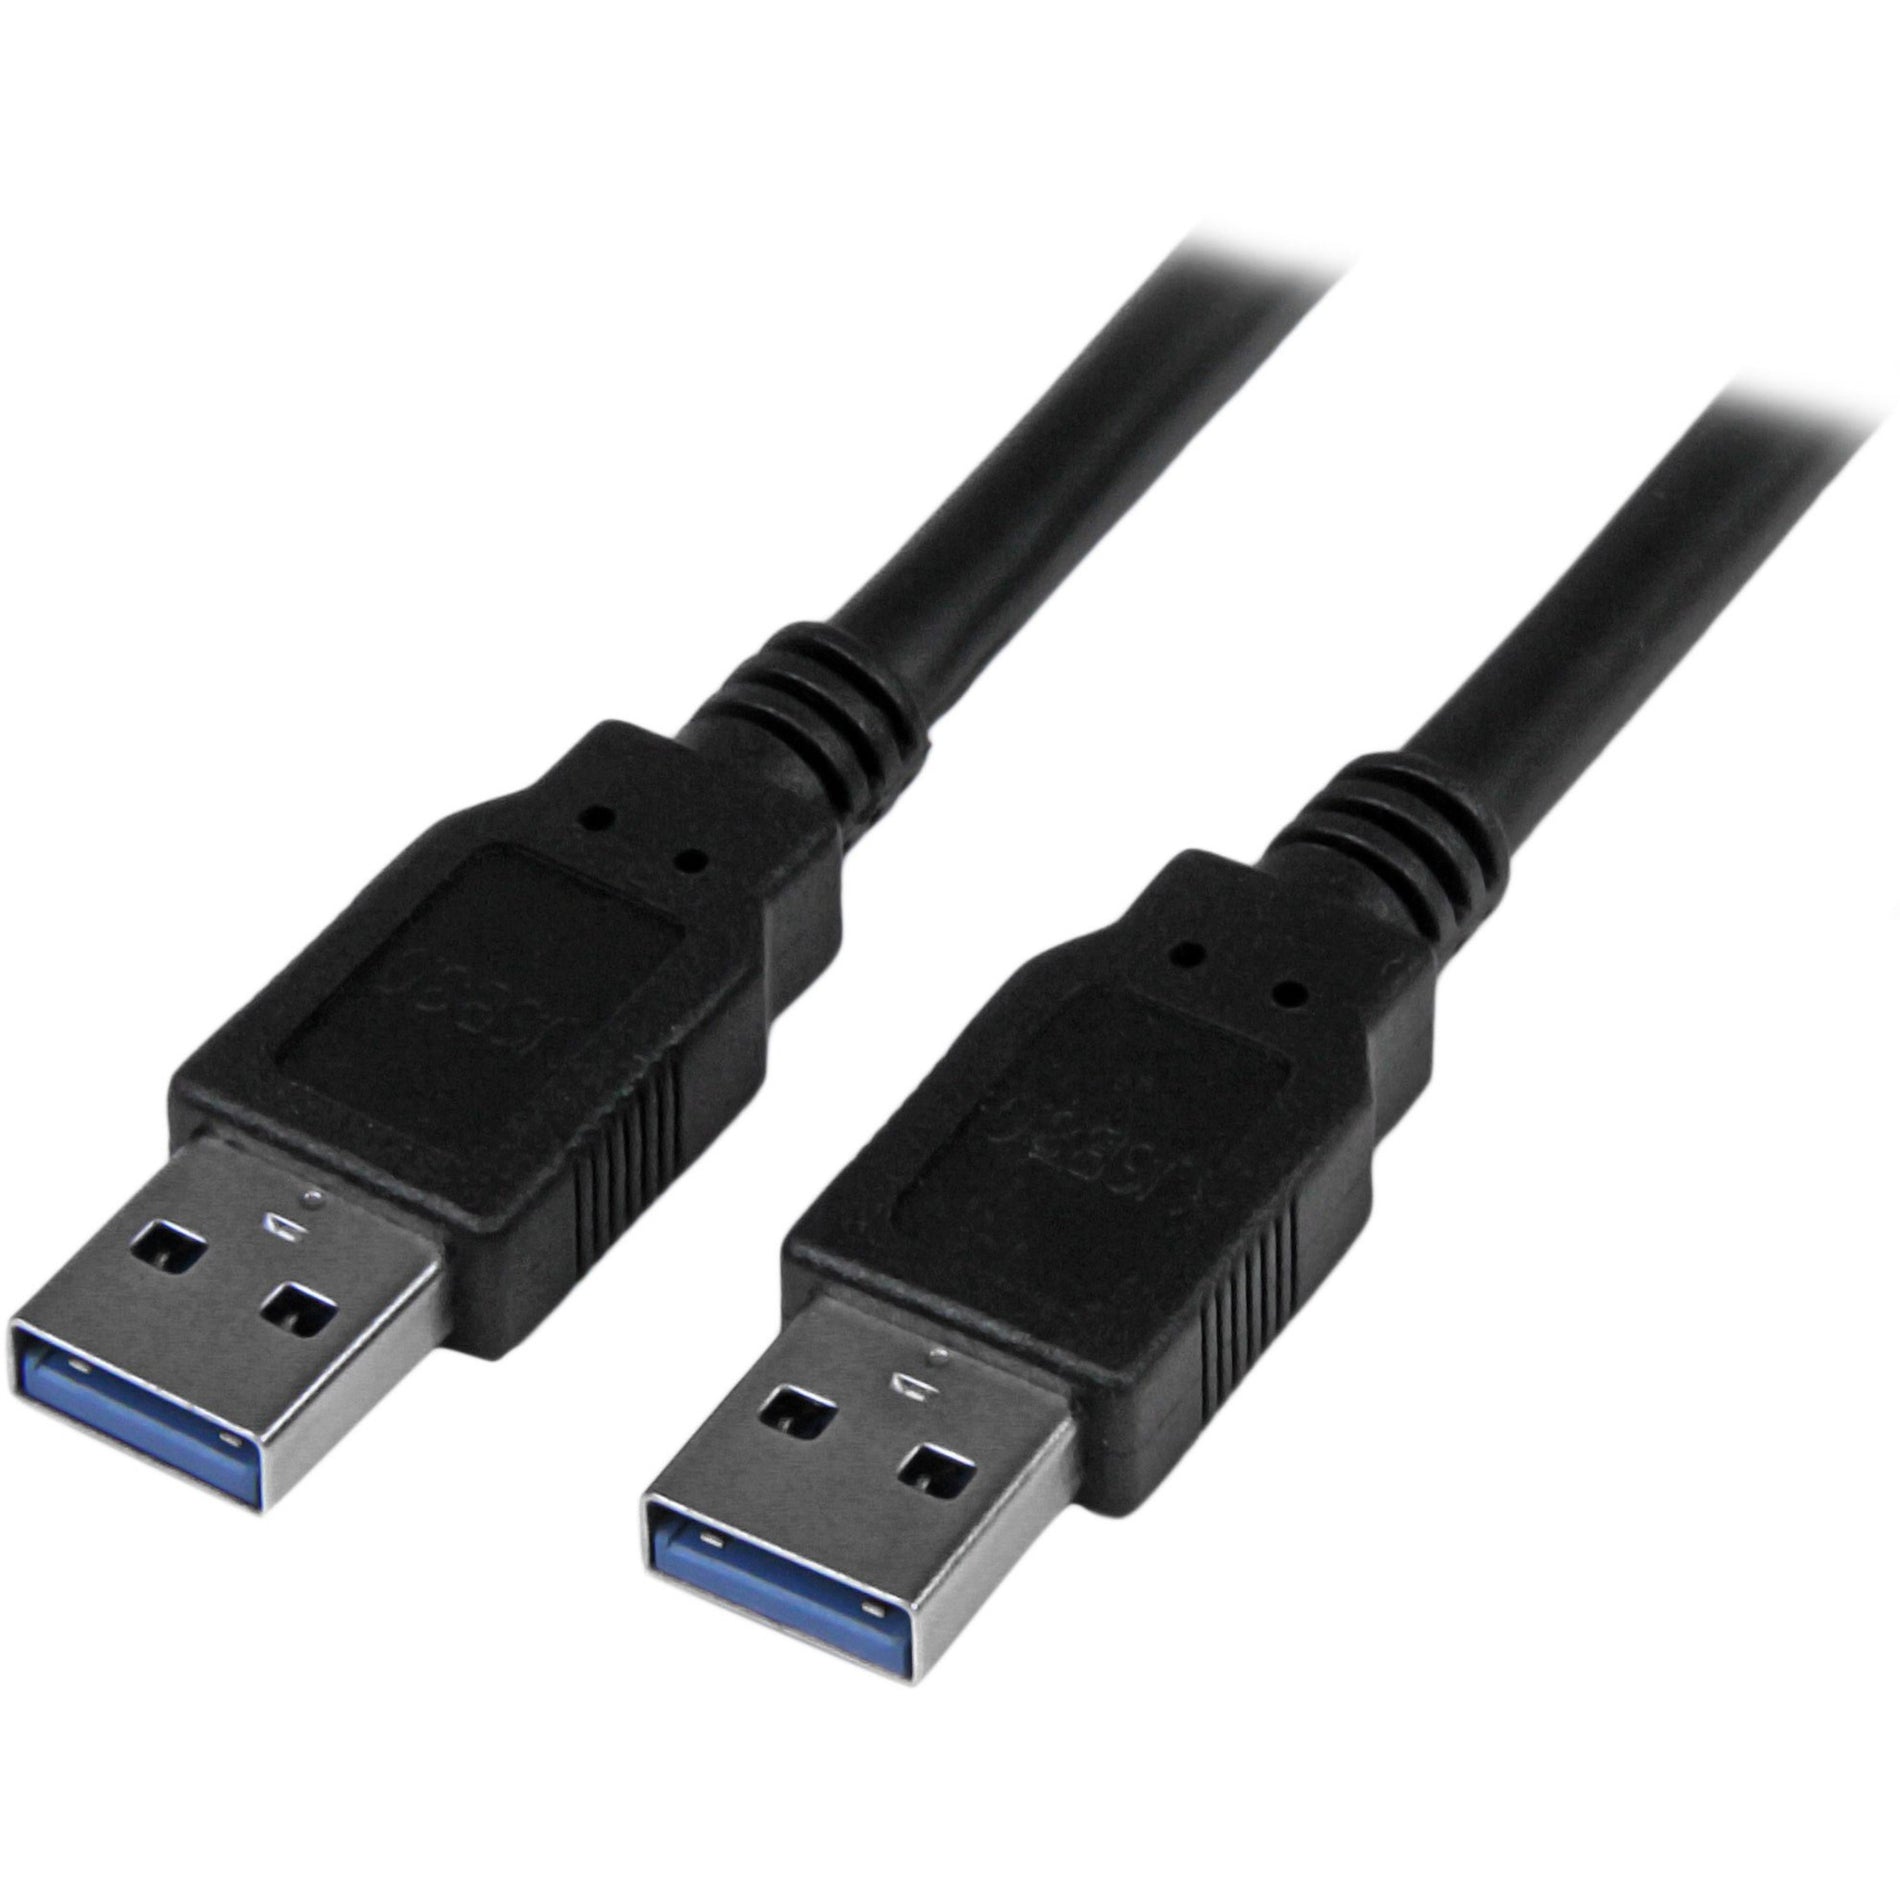 StarTech.com  USB3SAA6BK  6 英尺 黑色 超速 USB 3.0 数据线 A 到 A - M/M， 高速 数据传输 电磁干扰保护，终身保修 维  星奇 科技